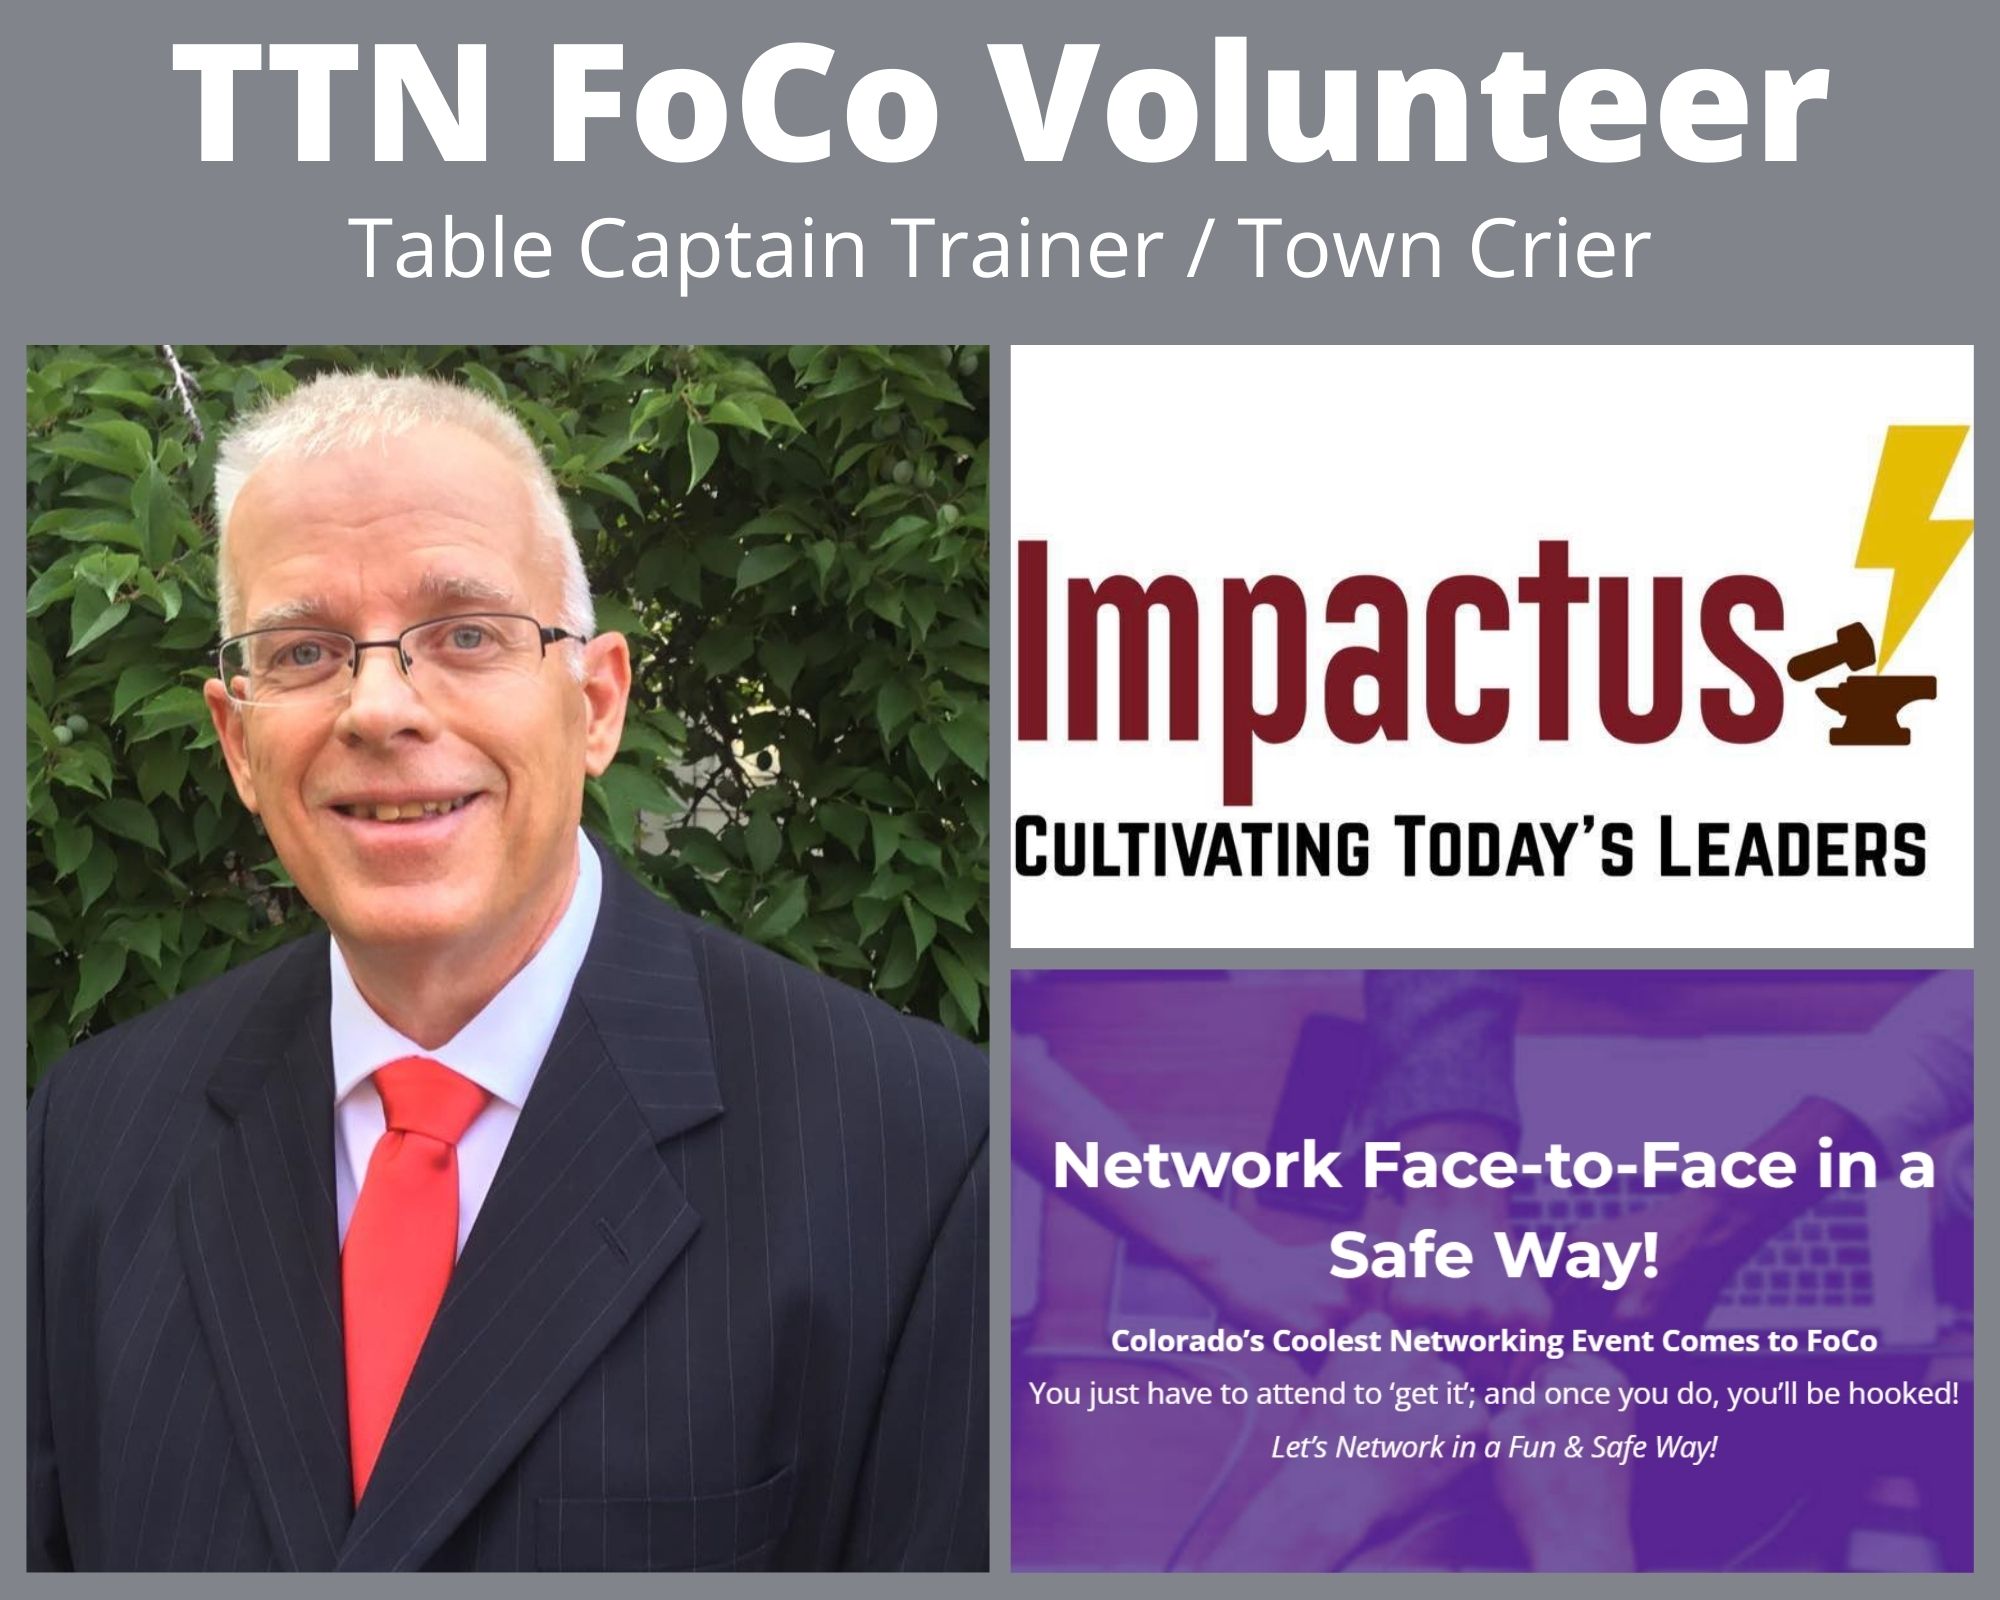 TTN FoCo Volunteer Oct22 - Table Captain Trainer - Rick Davis